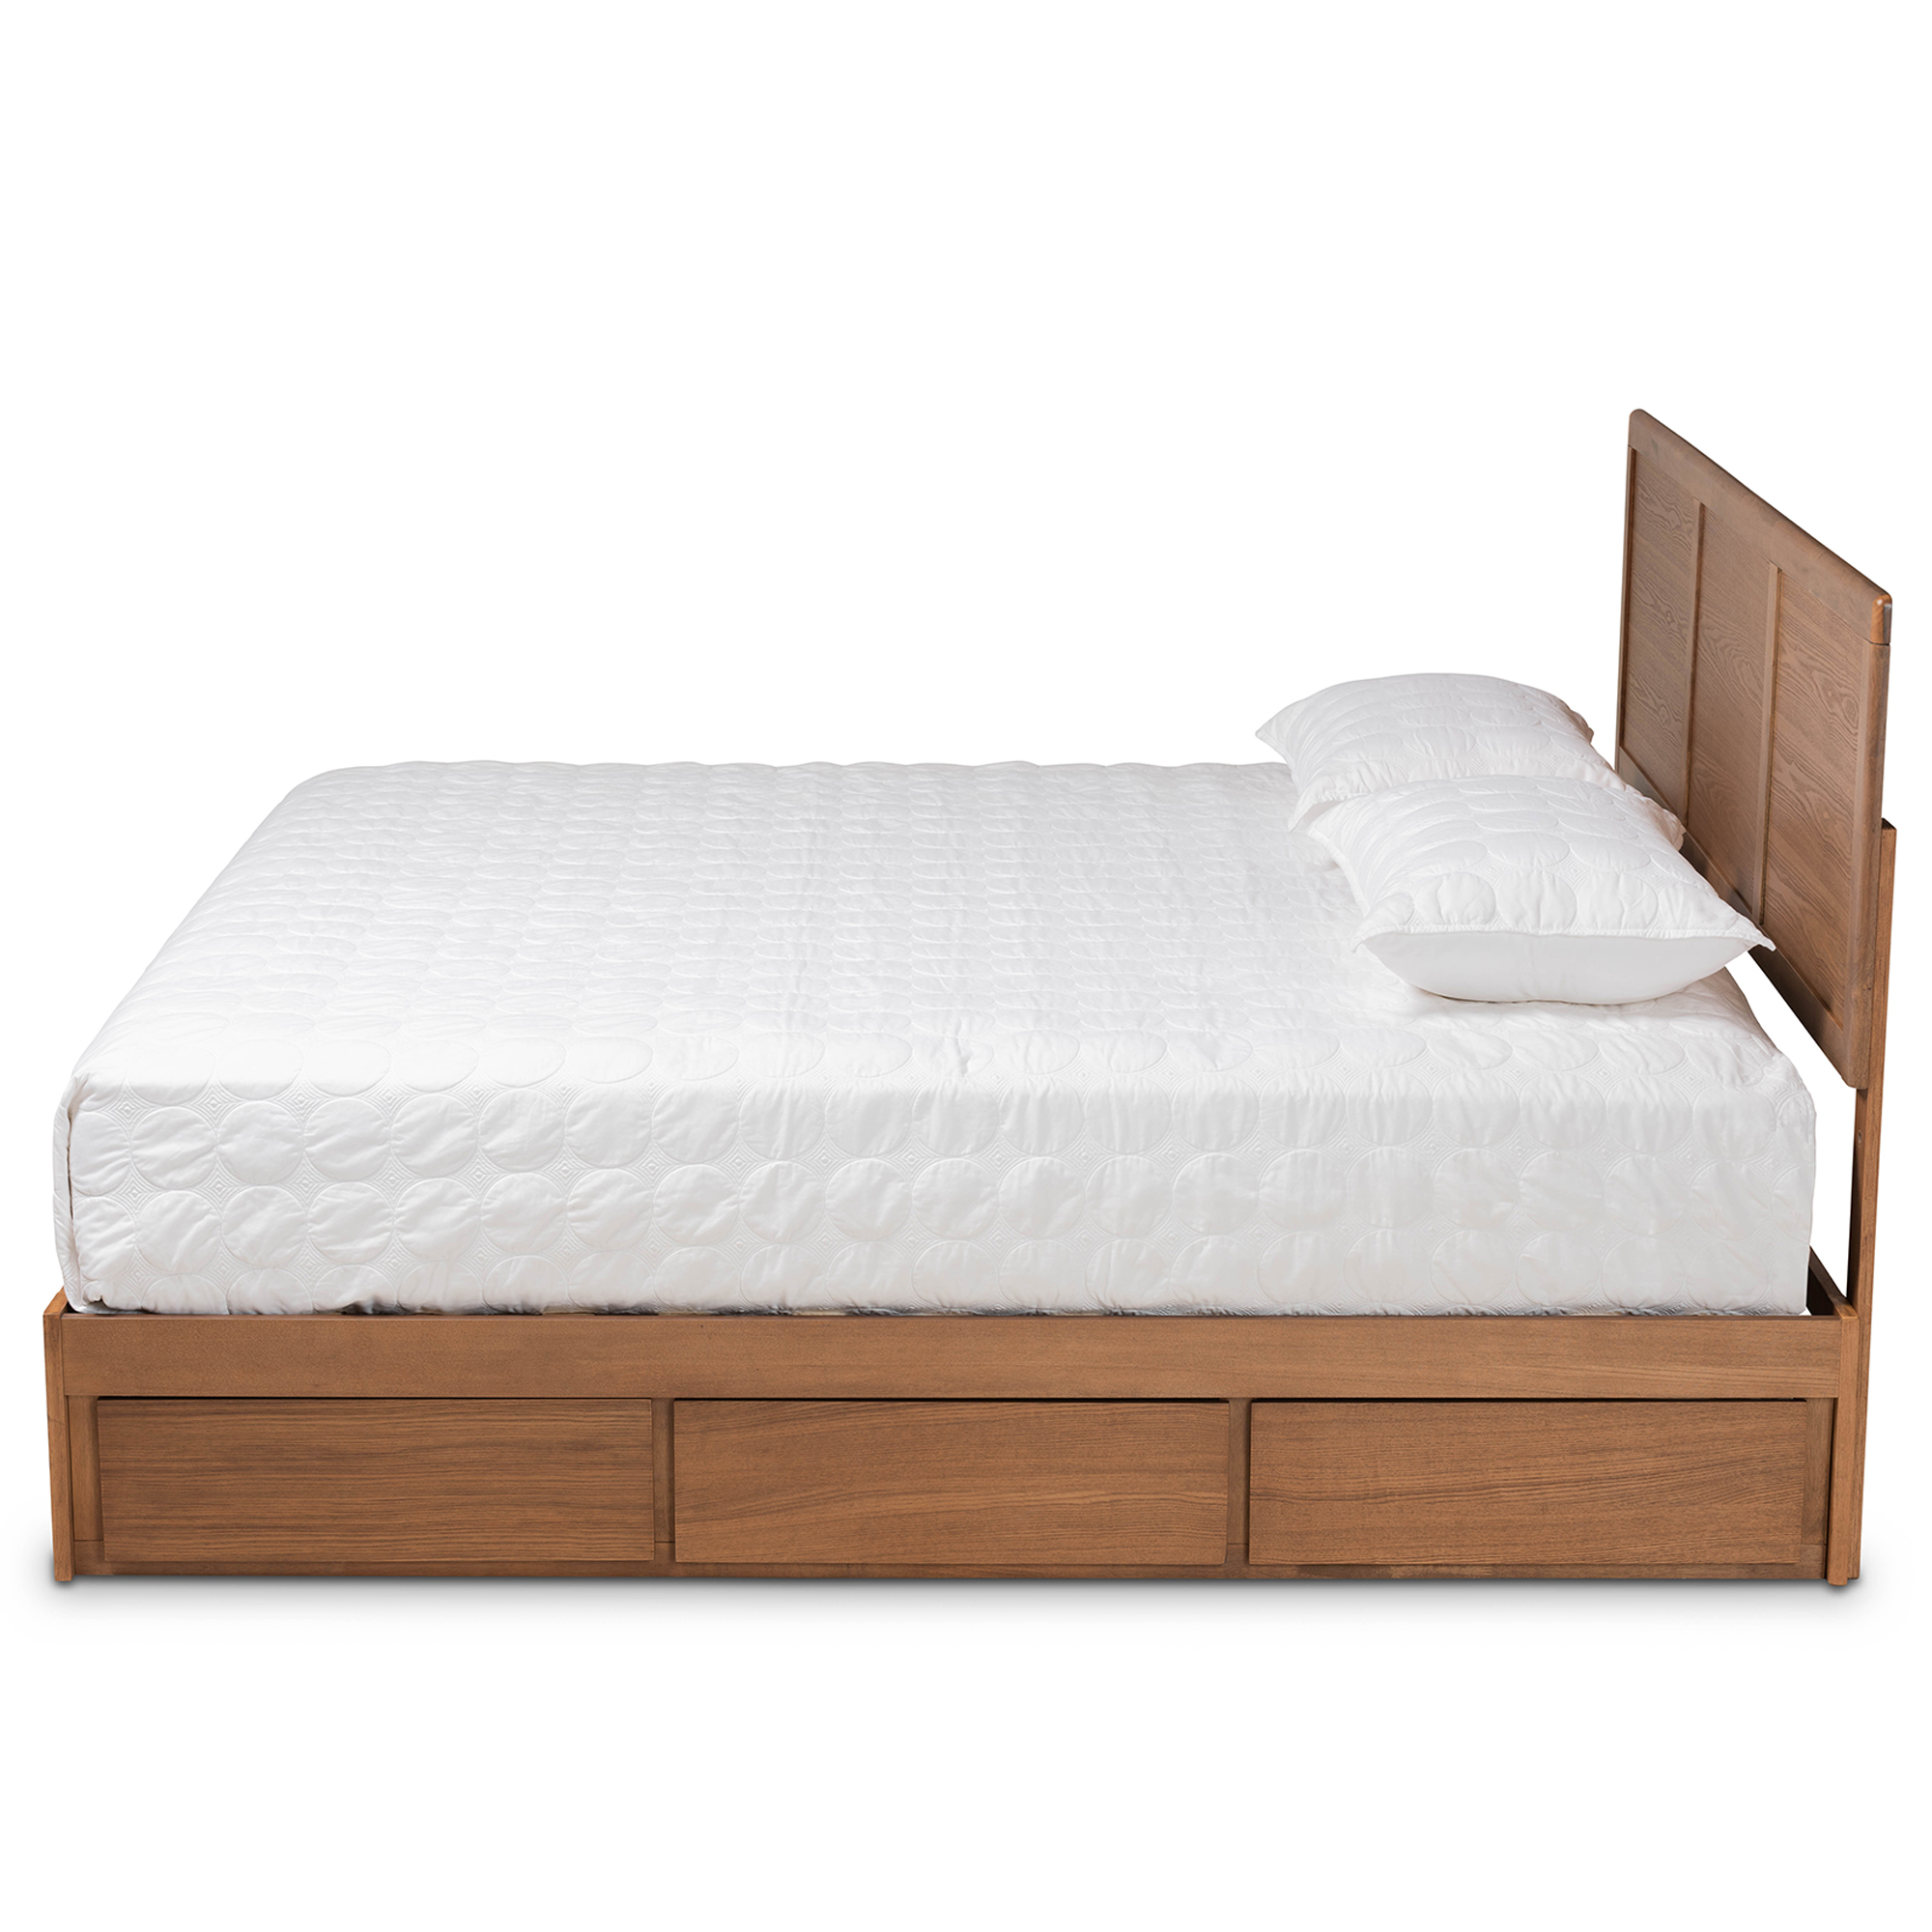 Baxton Studio Aras Contemporary/Modern Wood Storage Platform Bed, King, Ash Walnut - image 4 of 13